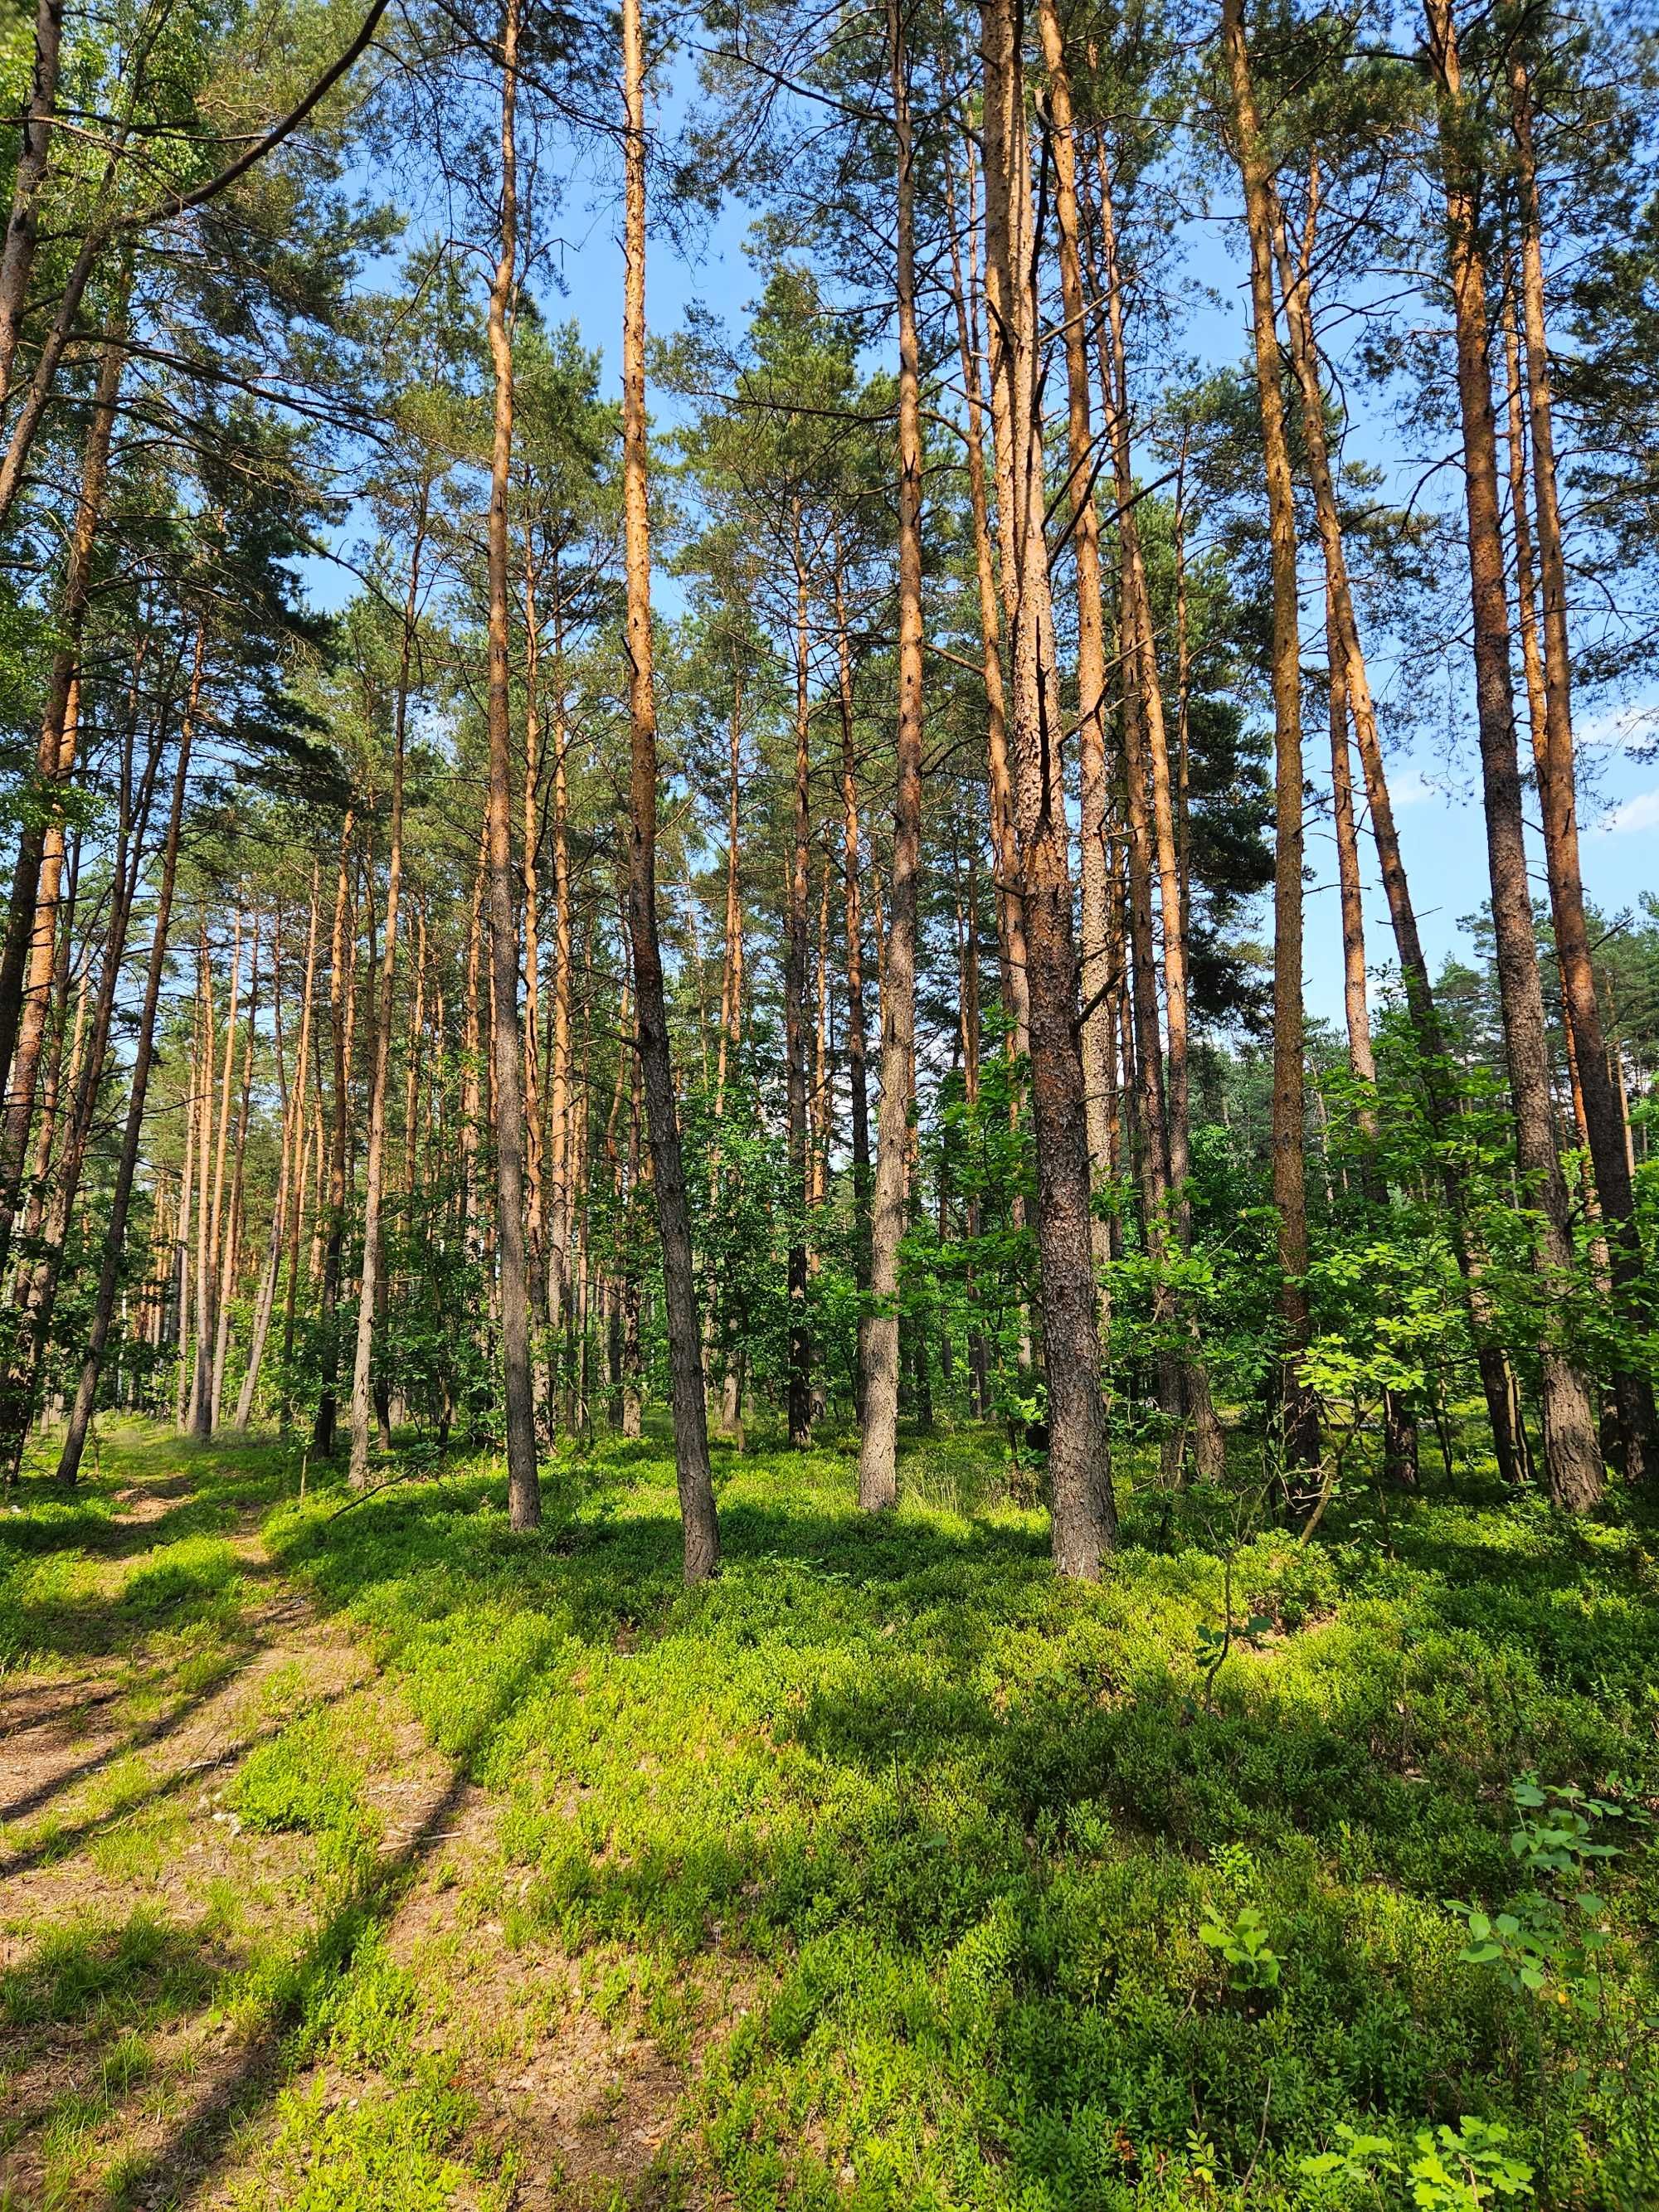 Działka leśna 2,8 ha - Bartniki